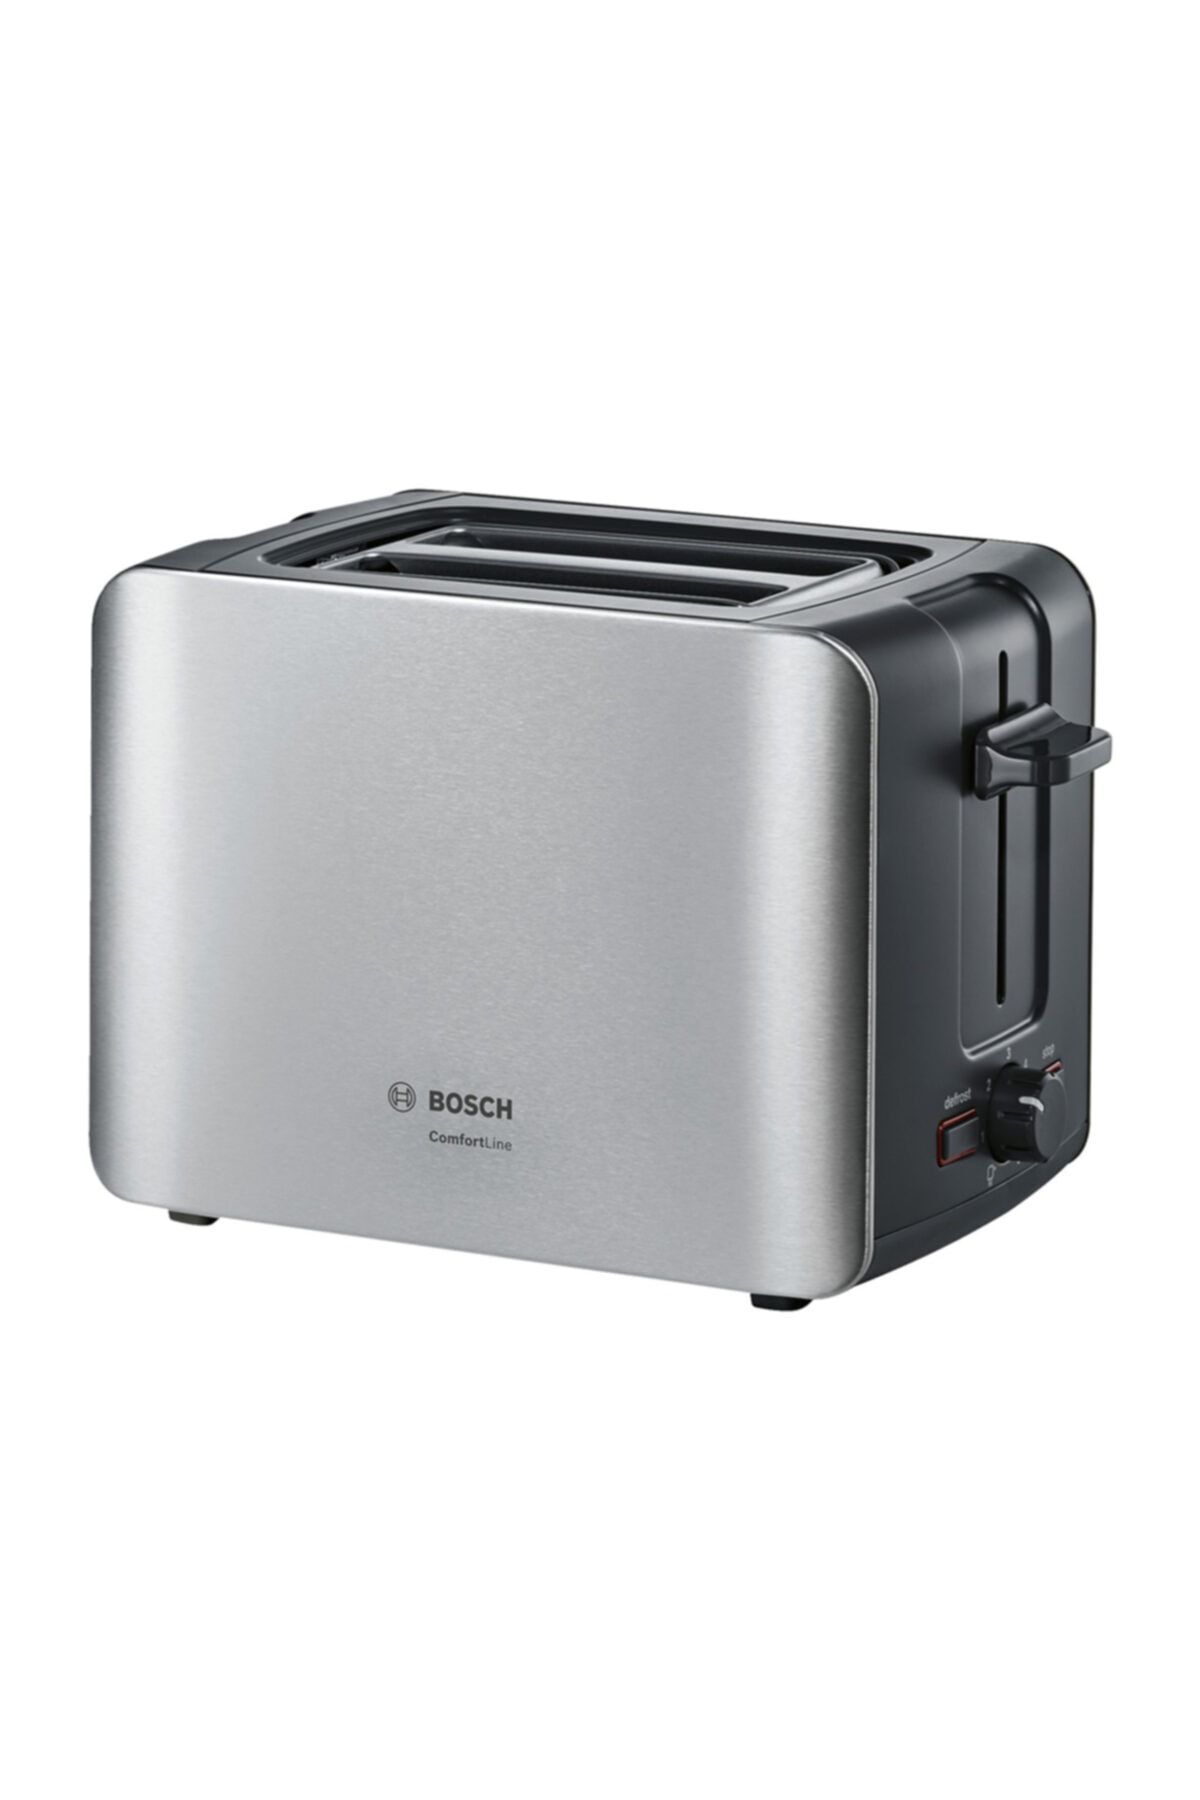 Bosch Kompakt Inox Ekmek Kızartma Makinesi Tat6a913 1090w